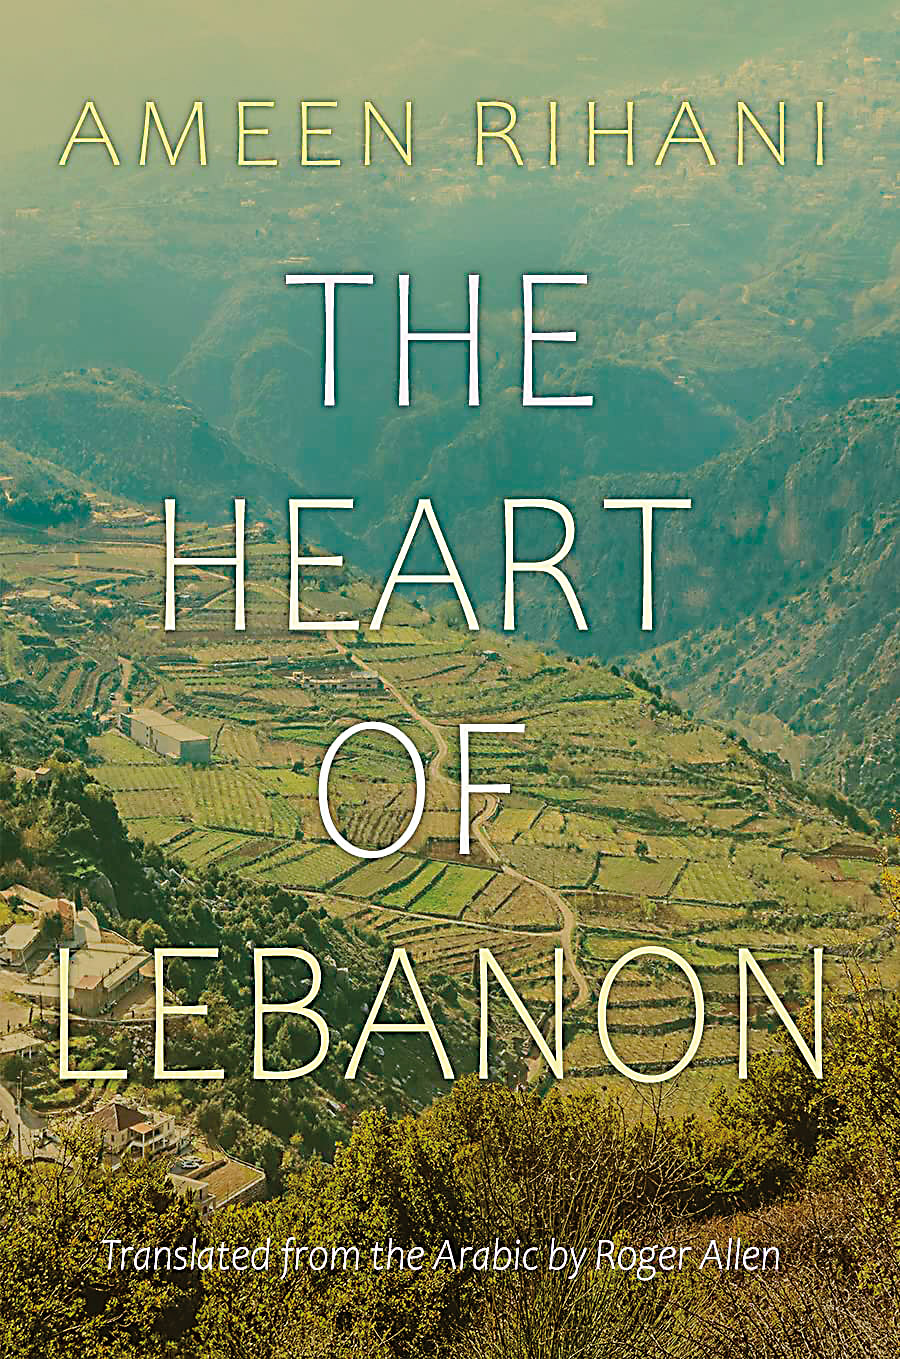 The Heart of Lebanon